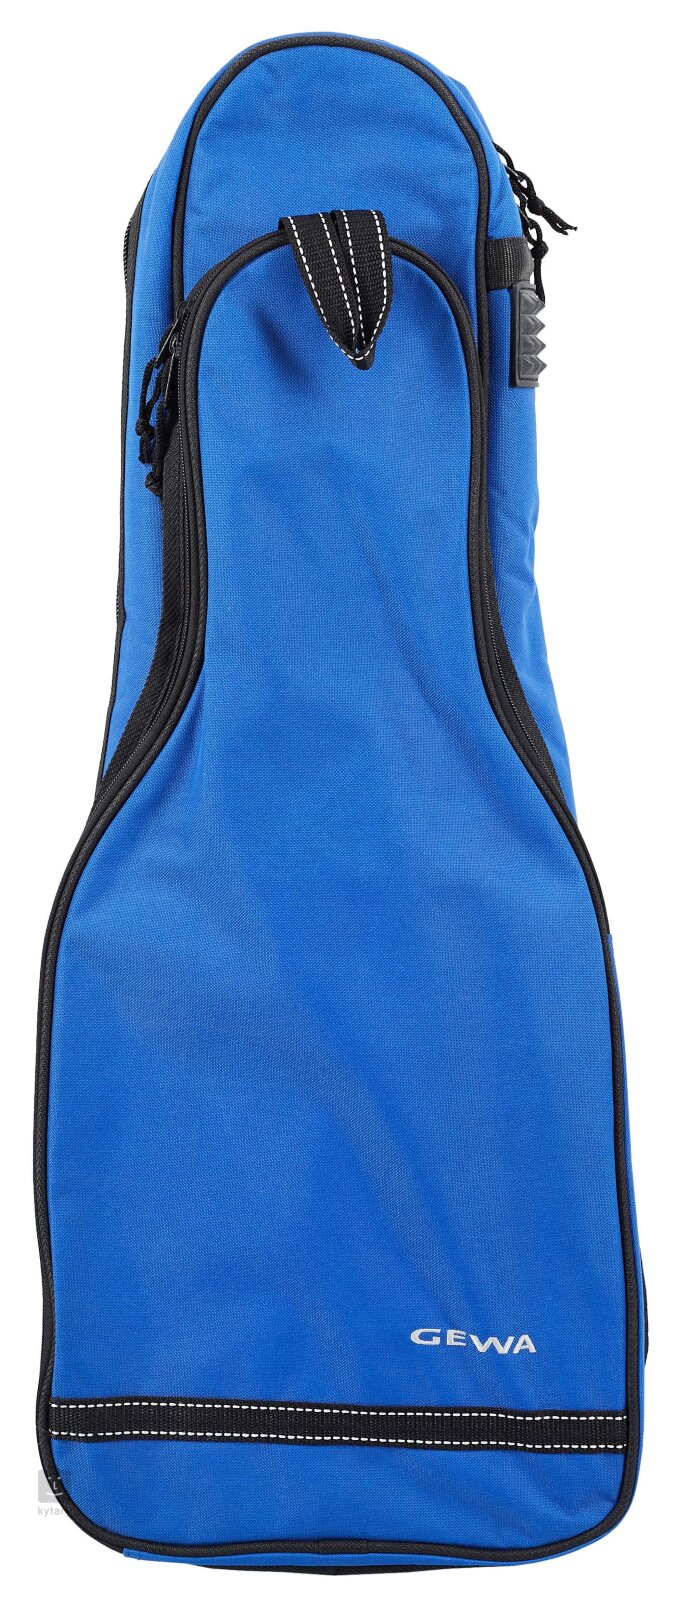 Gewa Blue Backpack for Violin / Viola SPS 4/4 Case Blue : photo 1